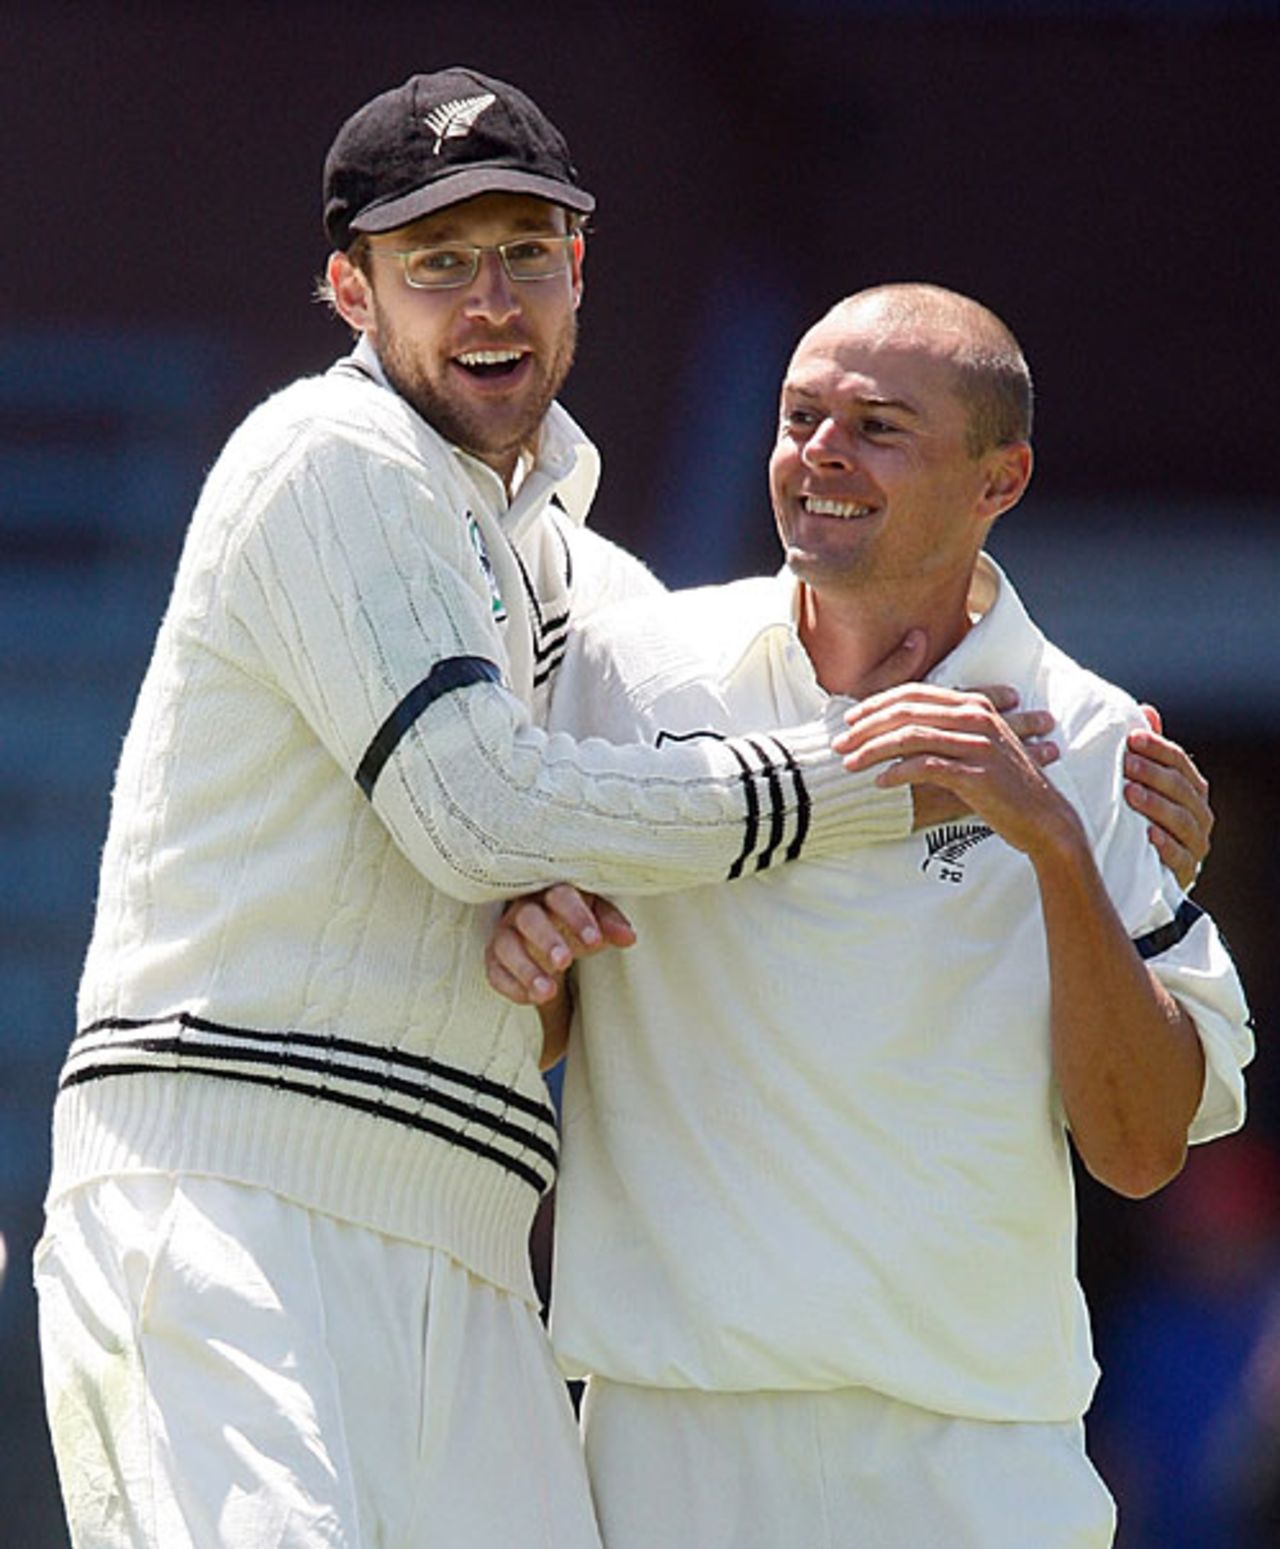 Daniel Vettori and Chris Martin celebrate a wicket, New Zealand v Bangladesh, 2nd Test, Wellington, 1st day, January 12, 2008